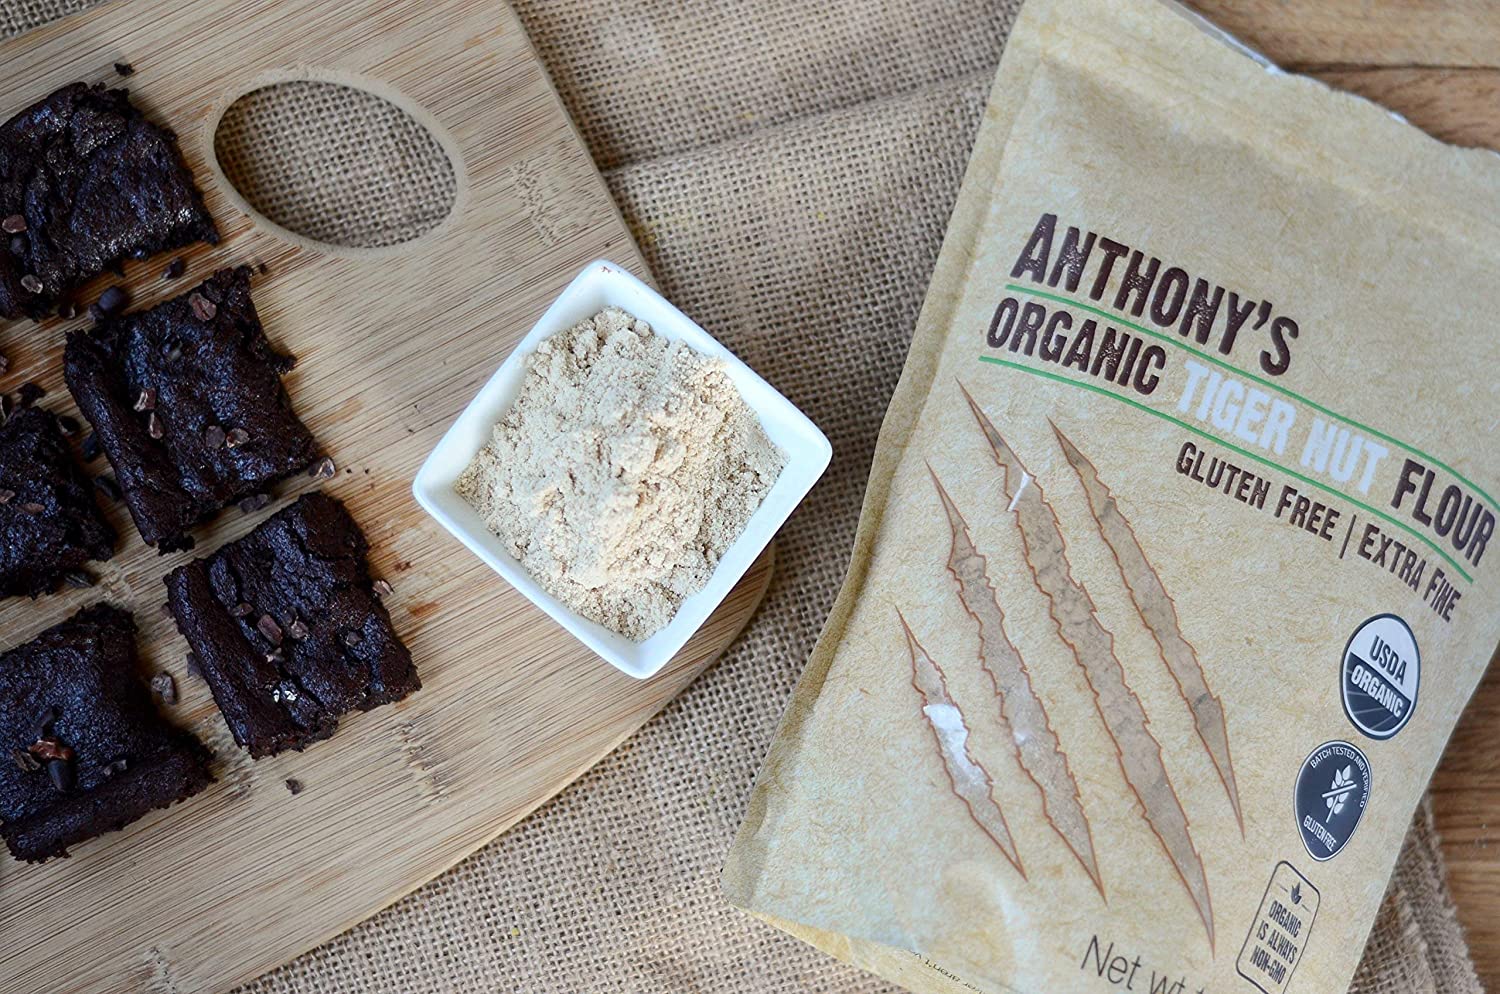 Anthony's Organic Tiger Nut Flour